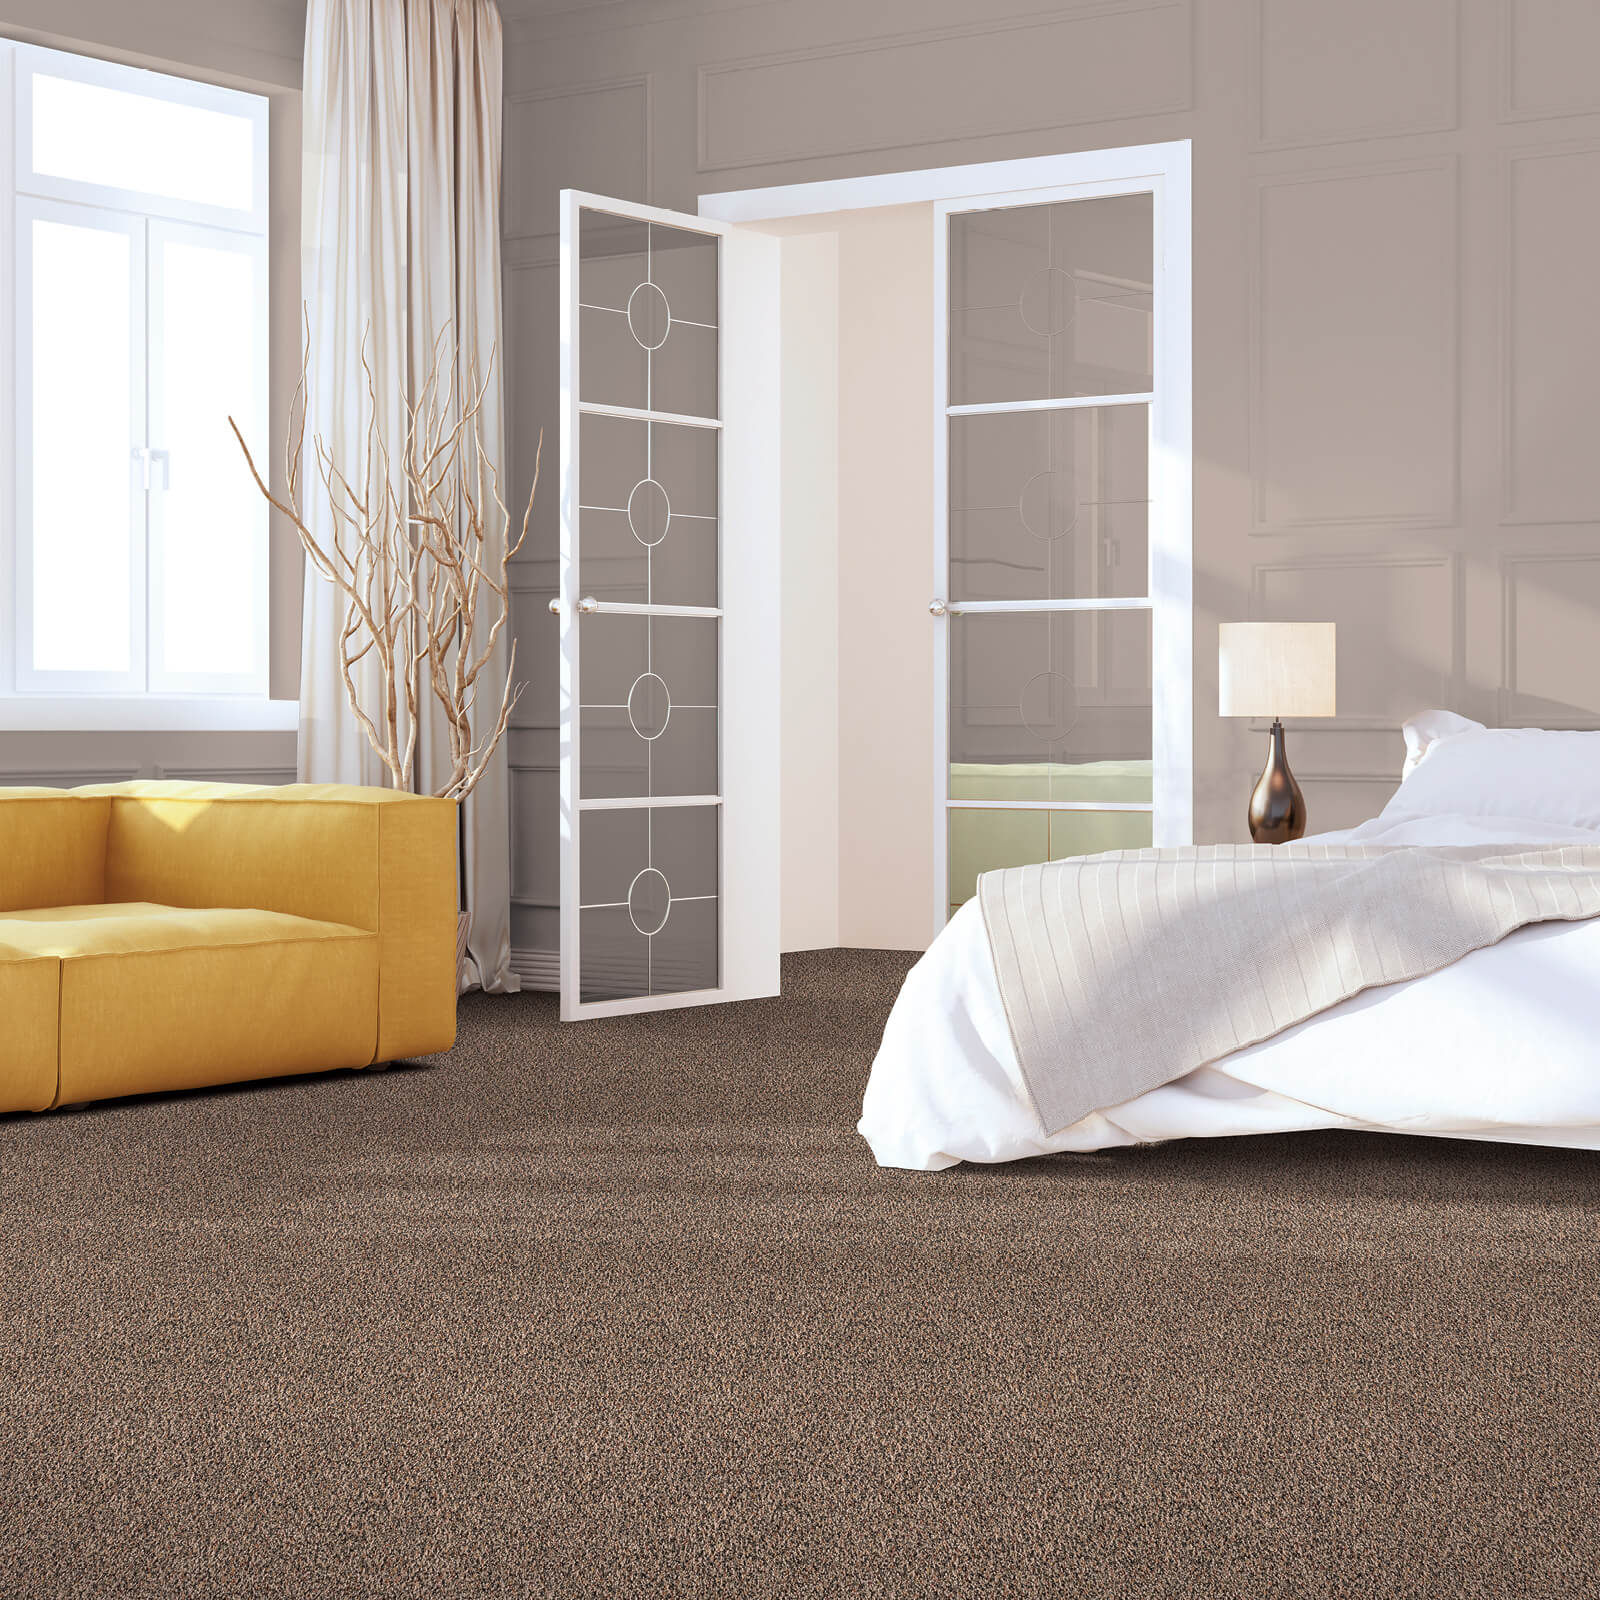 Impressive selection of Carpet| Floor Dimensions